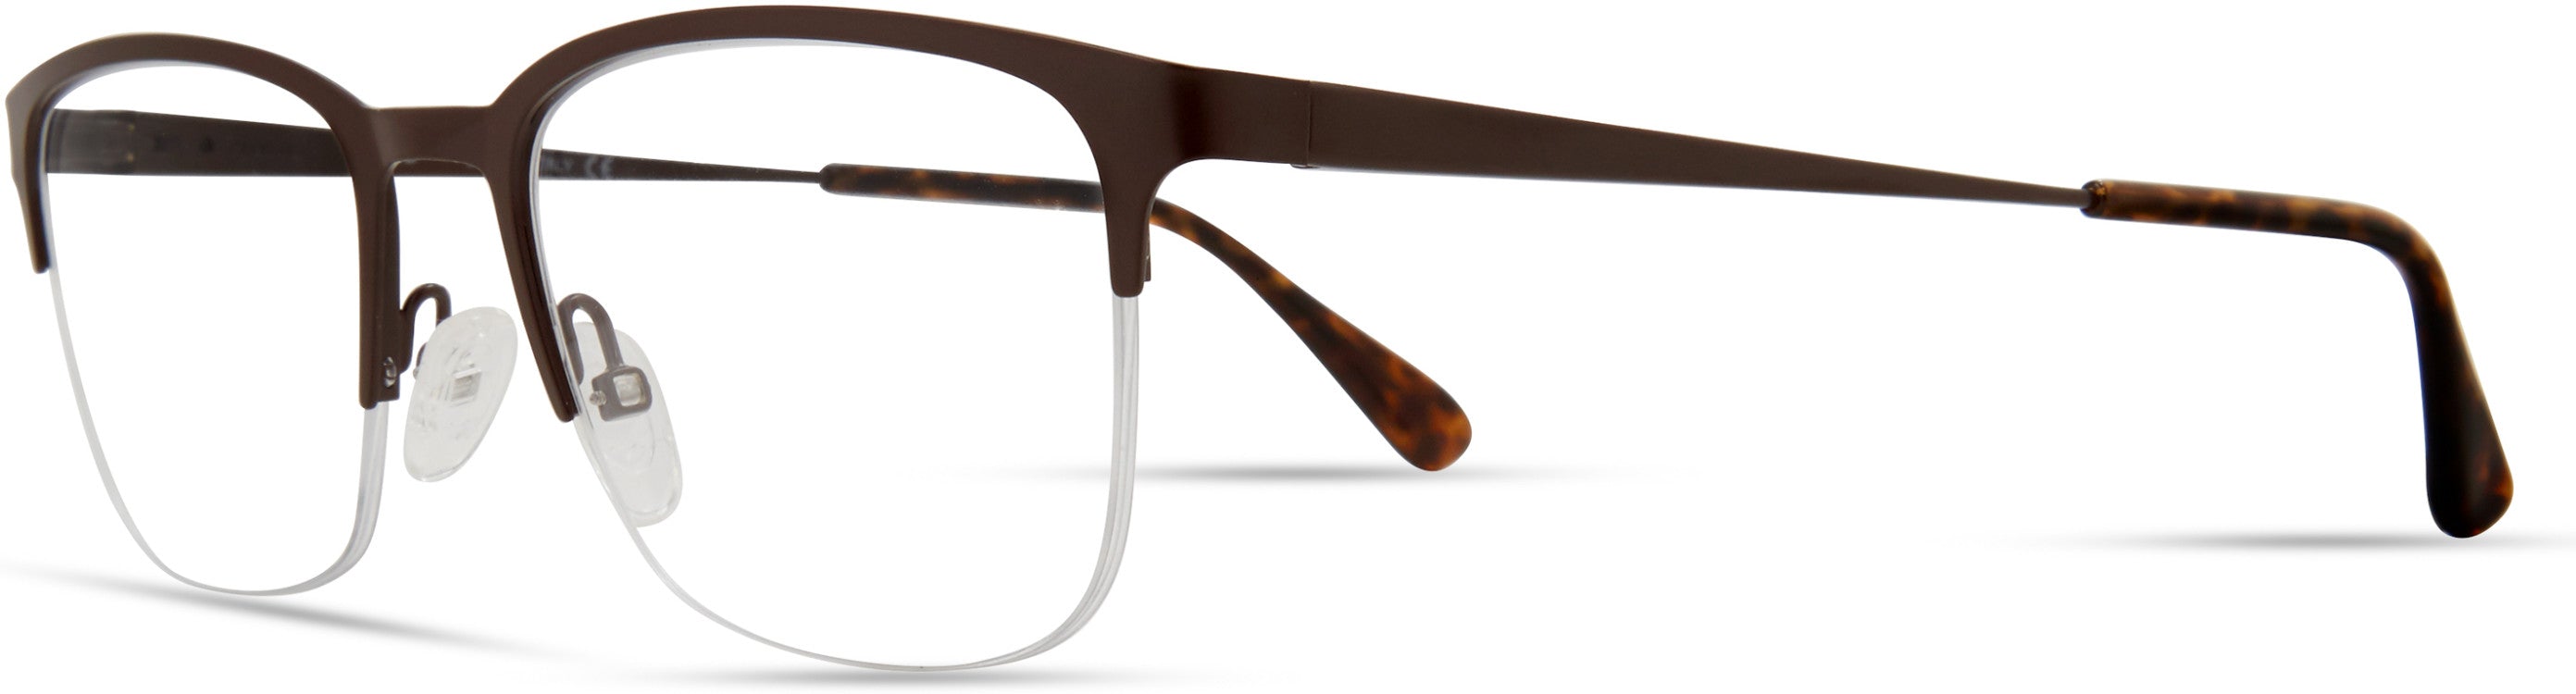  Elasta 7230 Rectangular Eyeglasses 04IN-04IN  Matte Brown (00 Demo Lens)